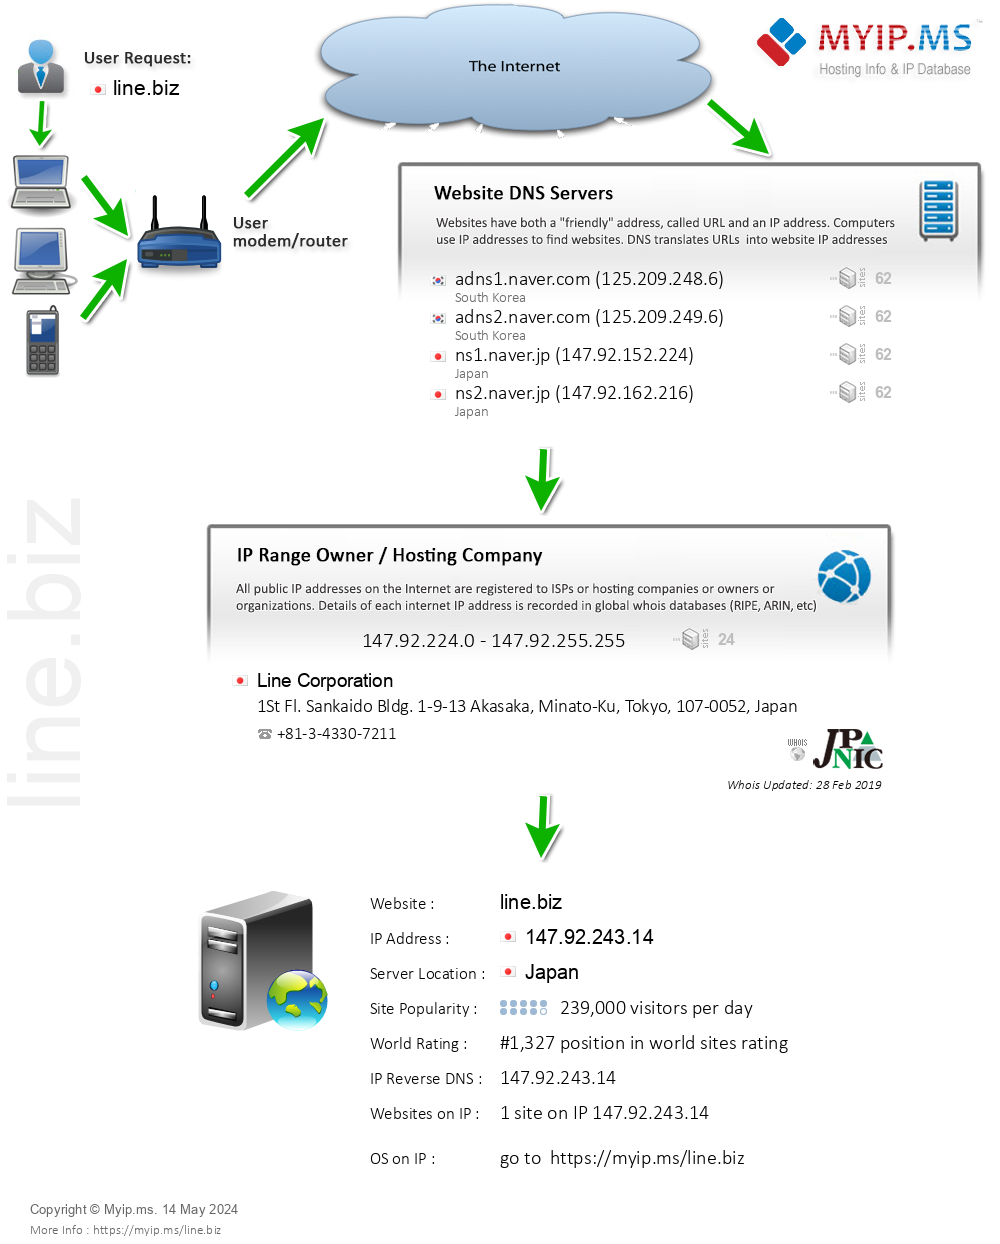 Line.biz - Website Hosting Visual IP Diagram